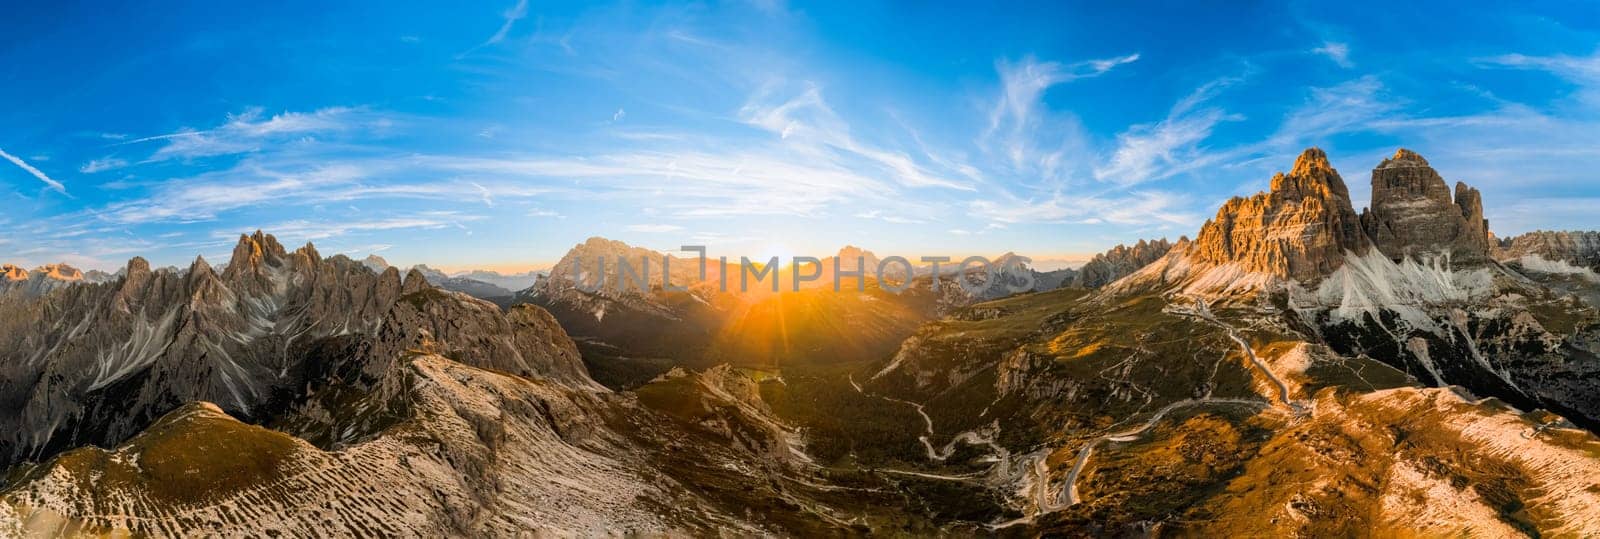 Rocky mountains Tre Cime di Lavaredo rise above deep canyons by vladimka